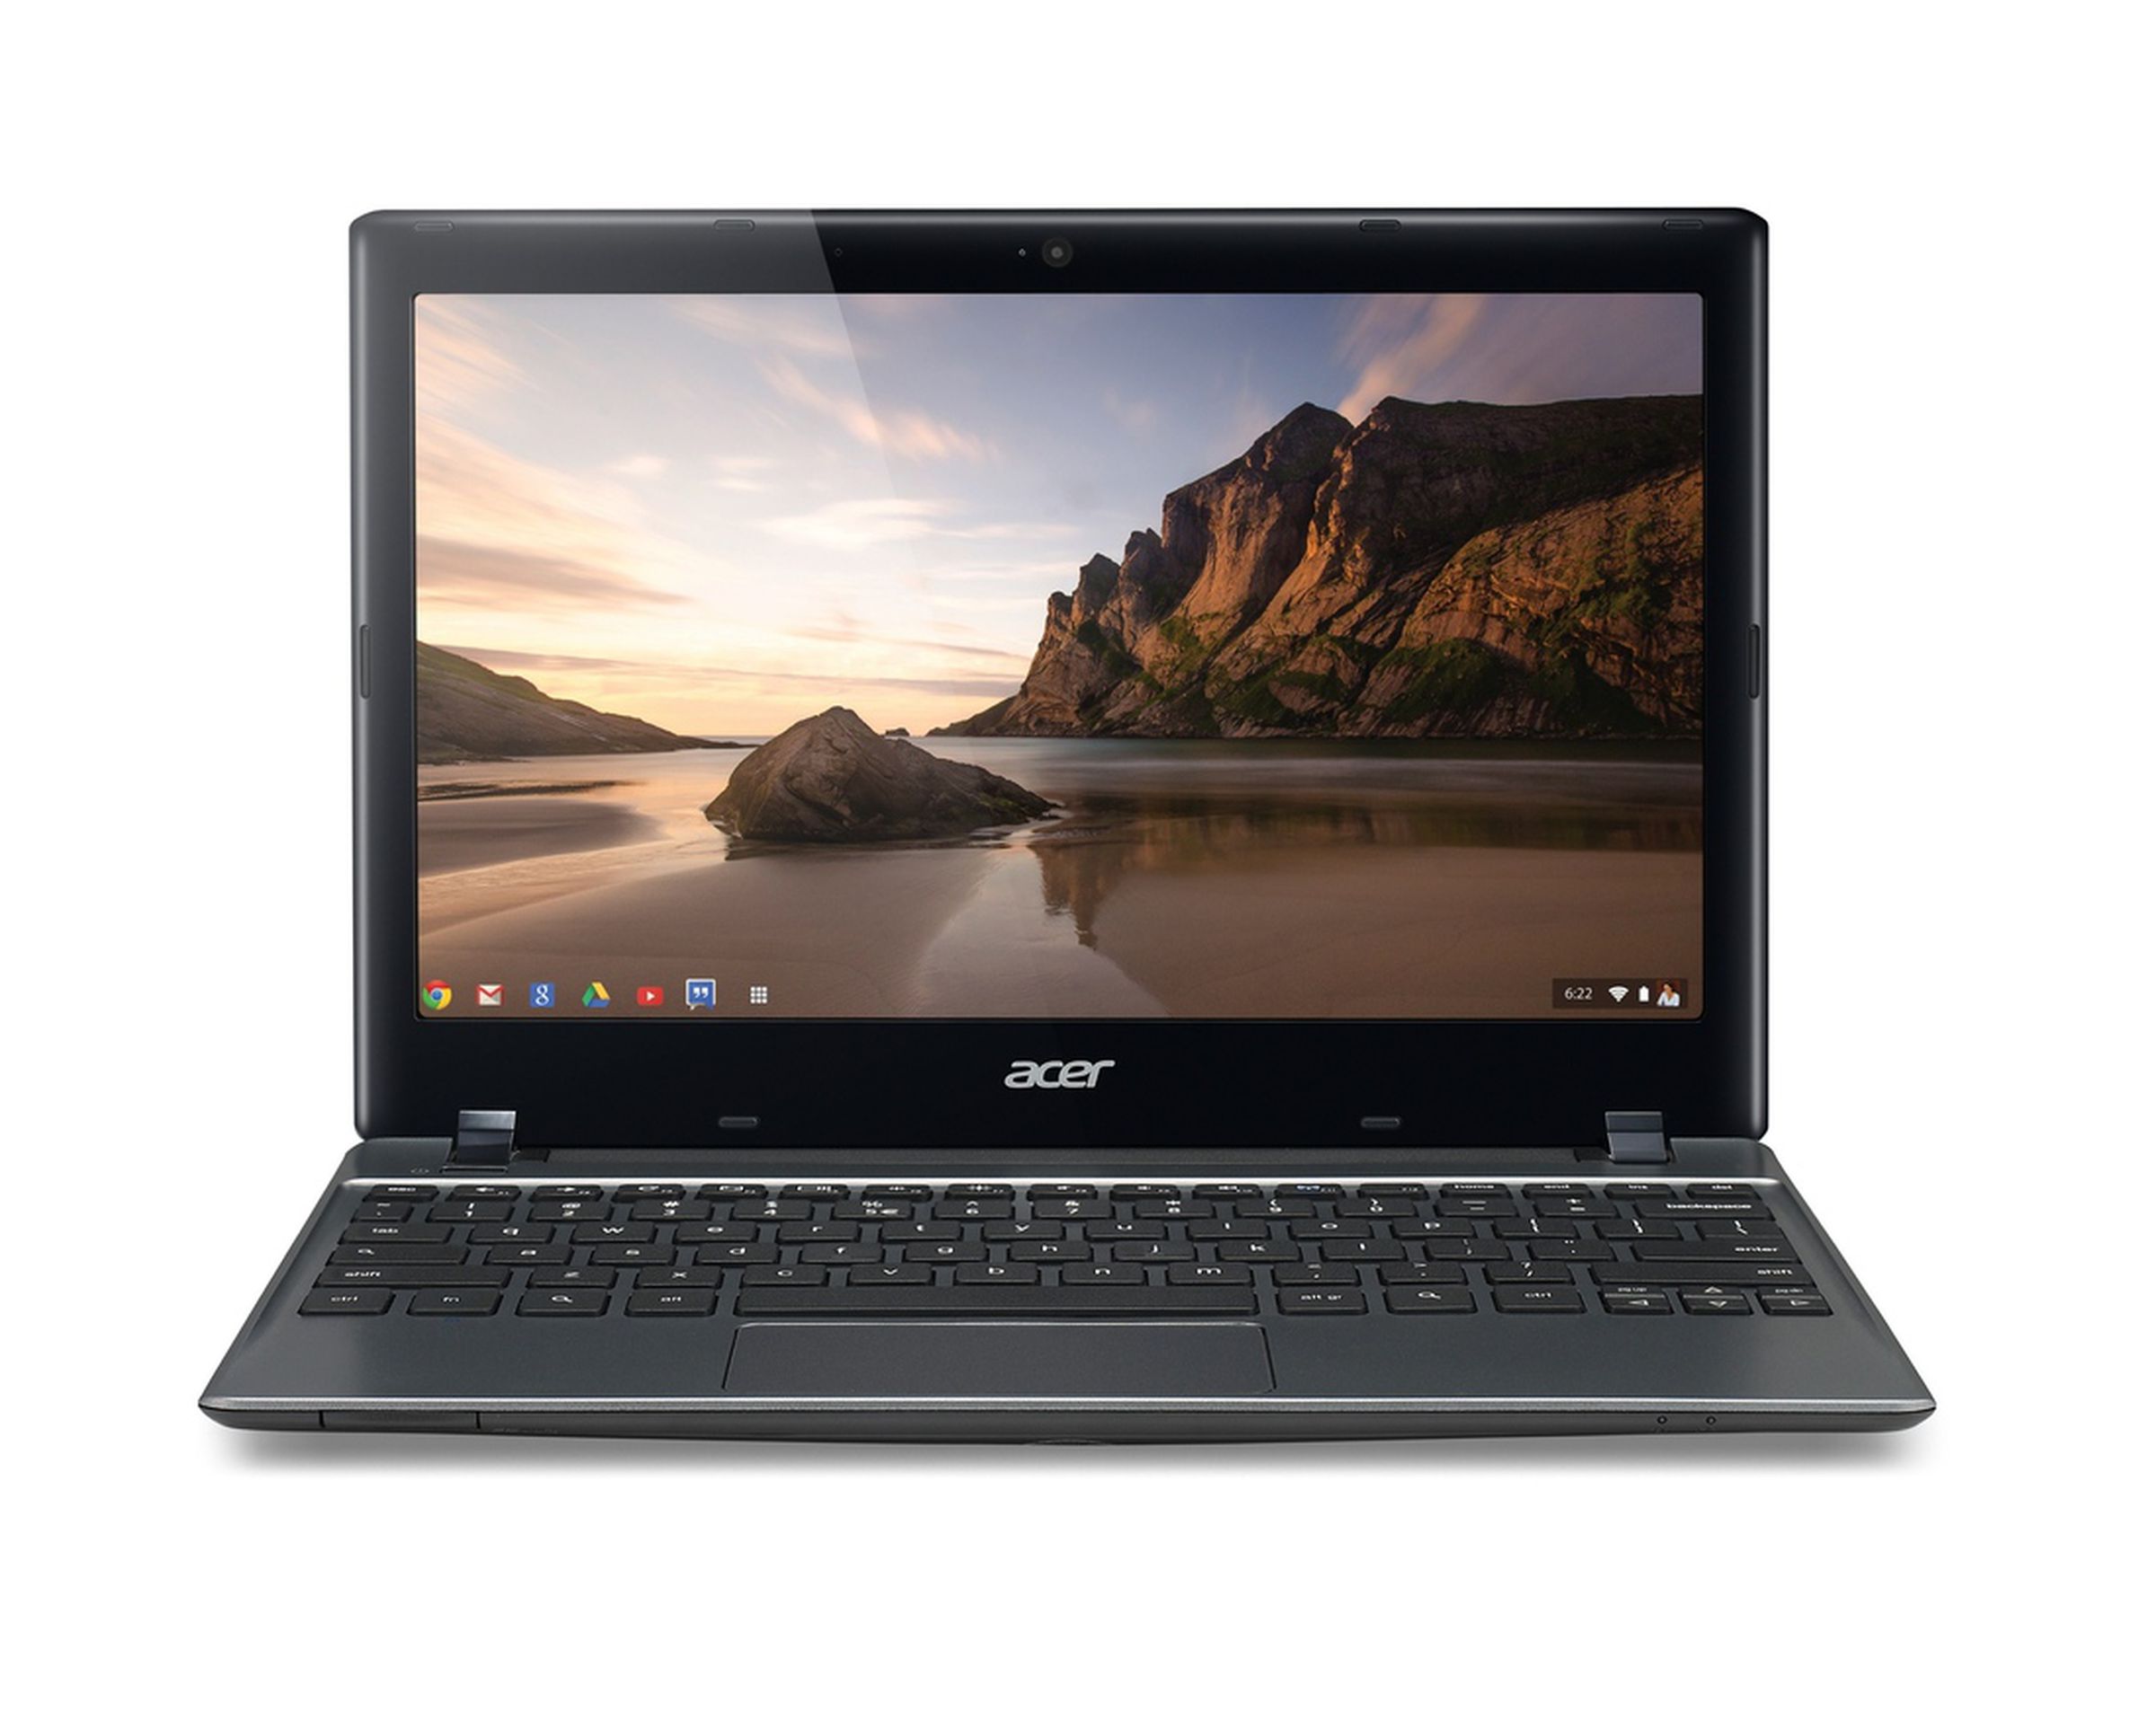 Acer C7 Chromebook images